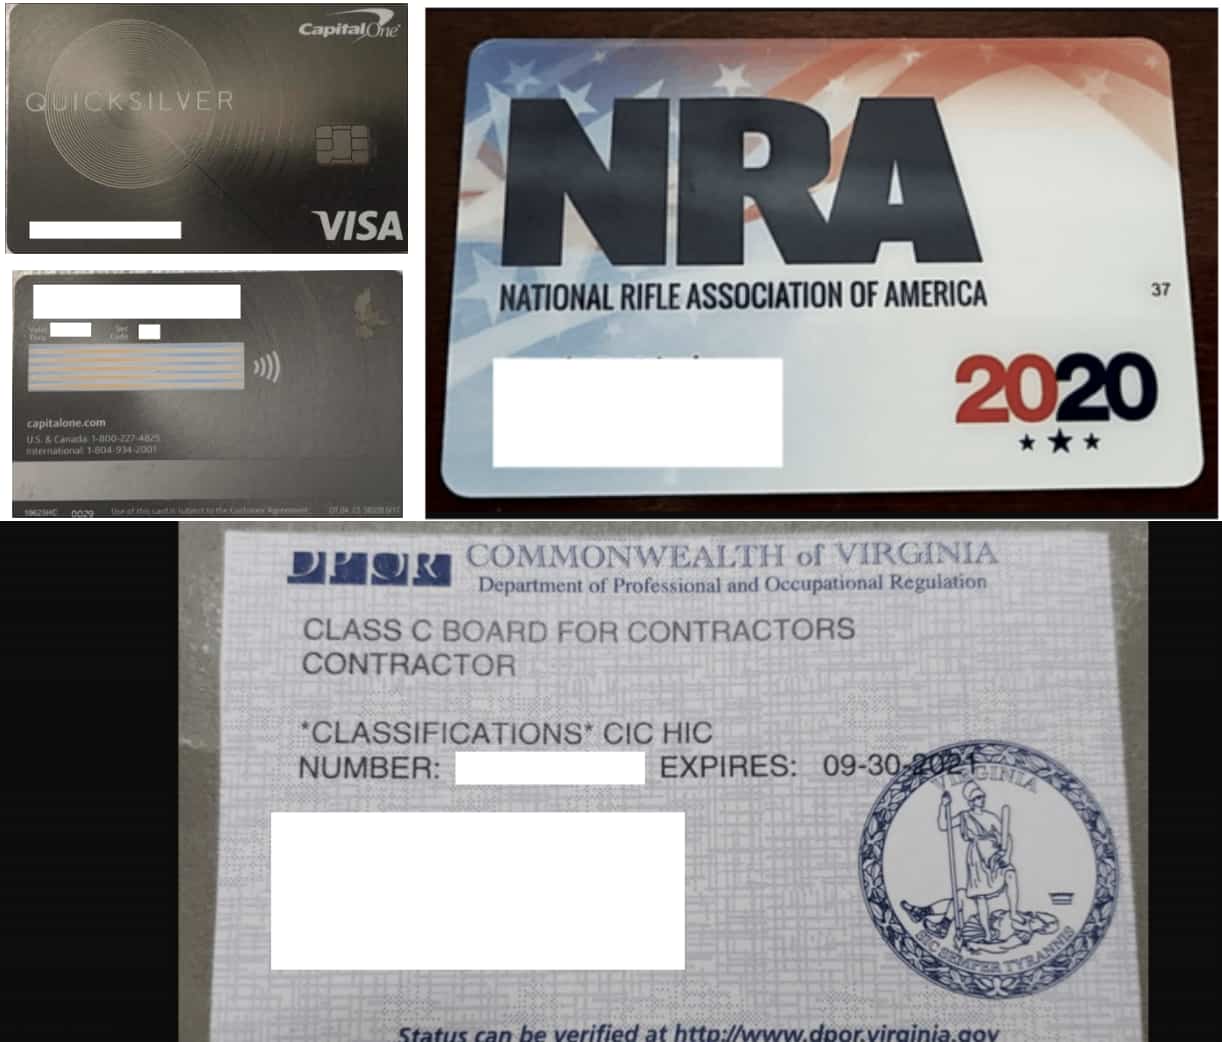 1: Credit card 2: NRA membership cards 3: Govt ID card. 